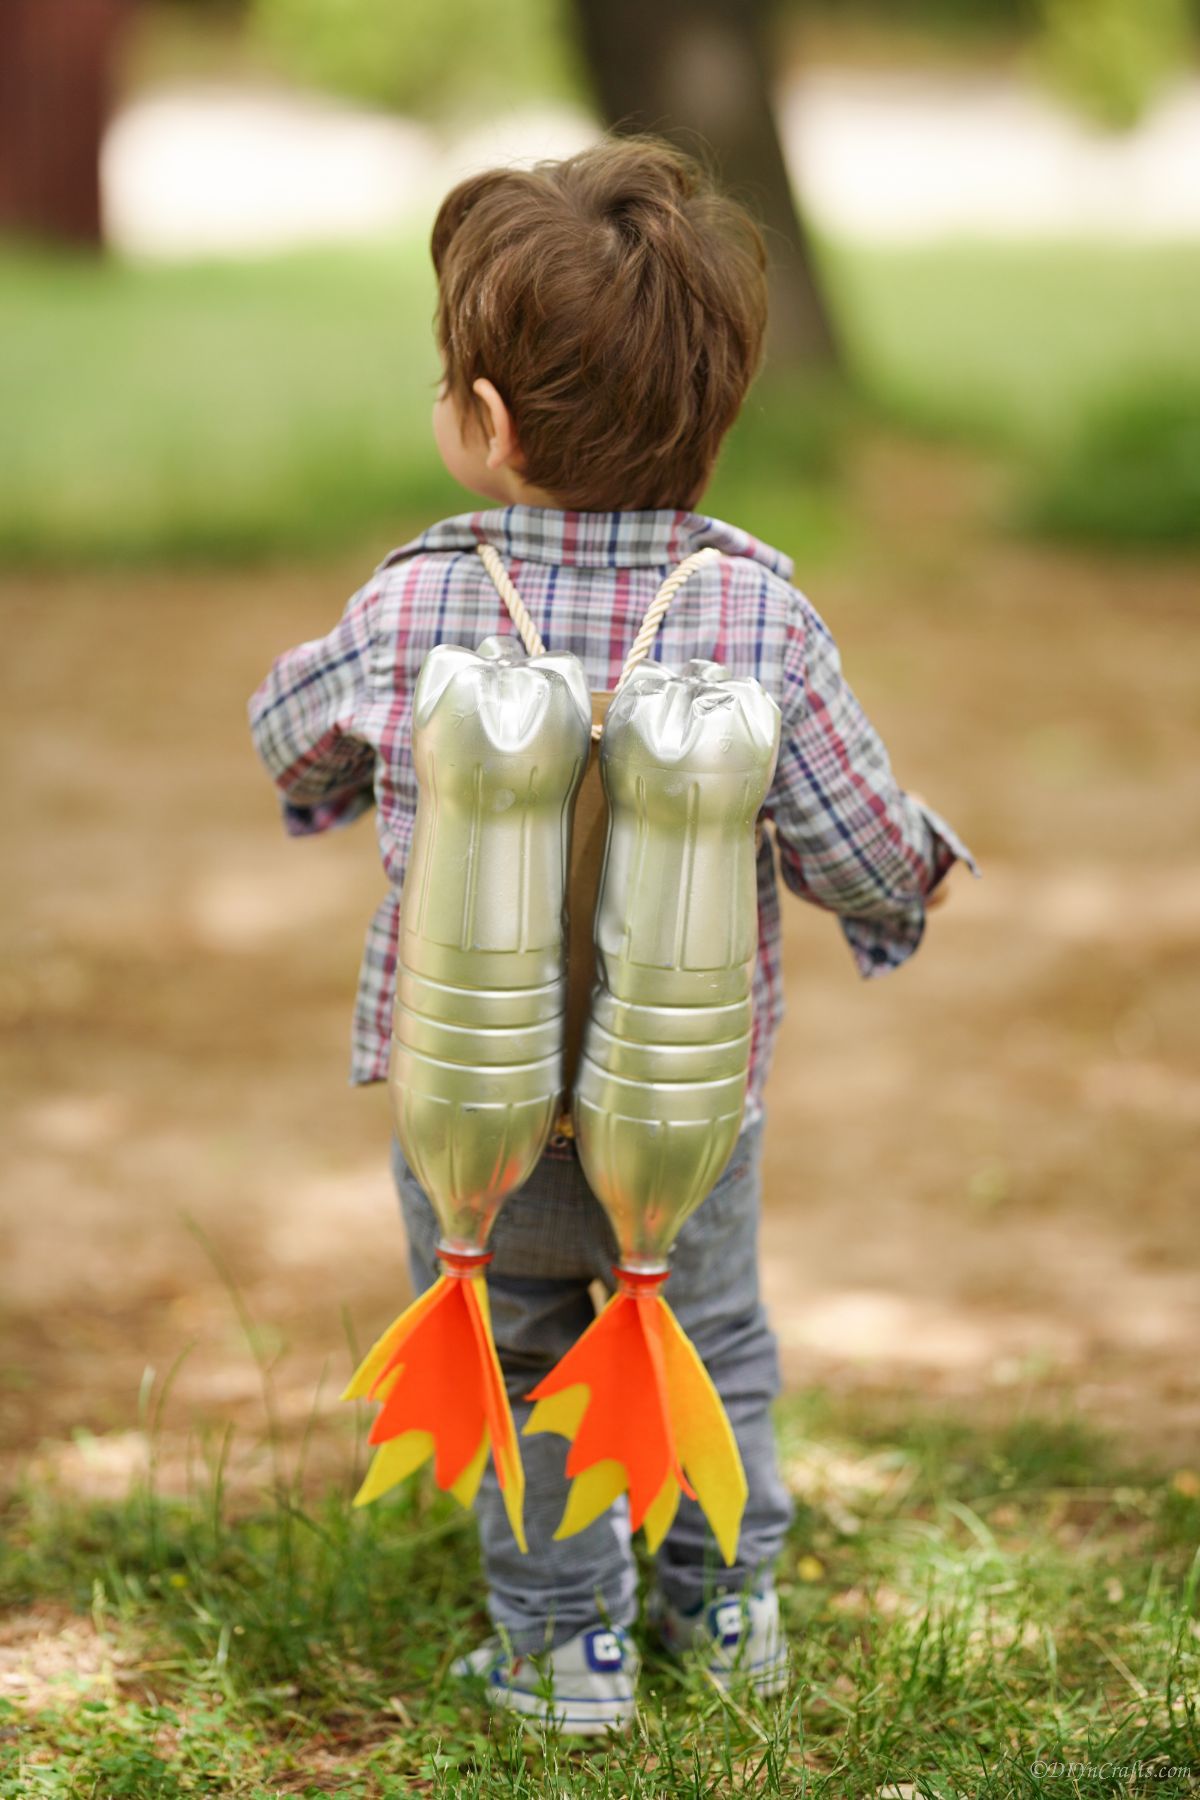 little boy wearing jet pack costume made of plastic bottles